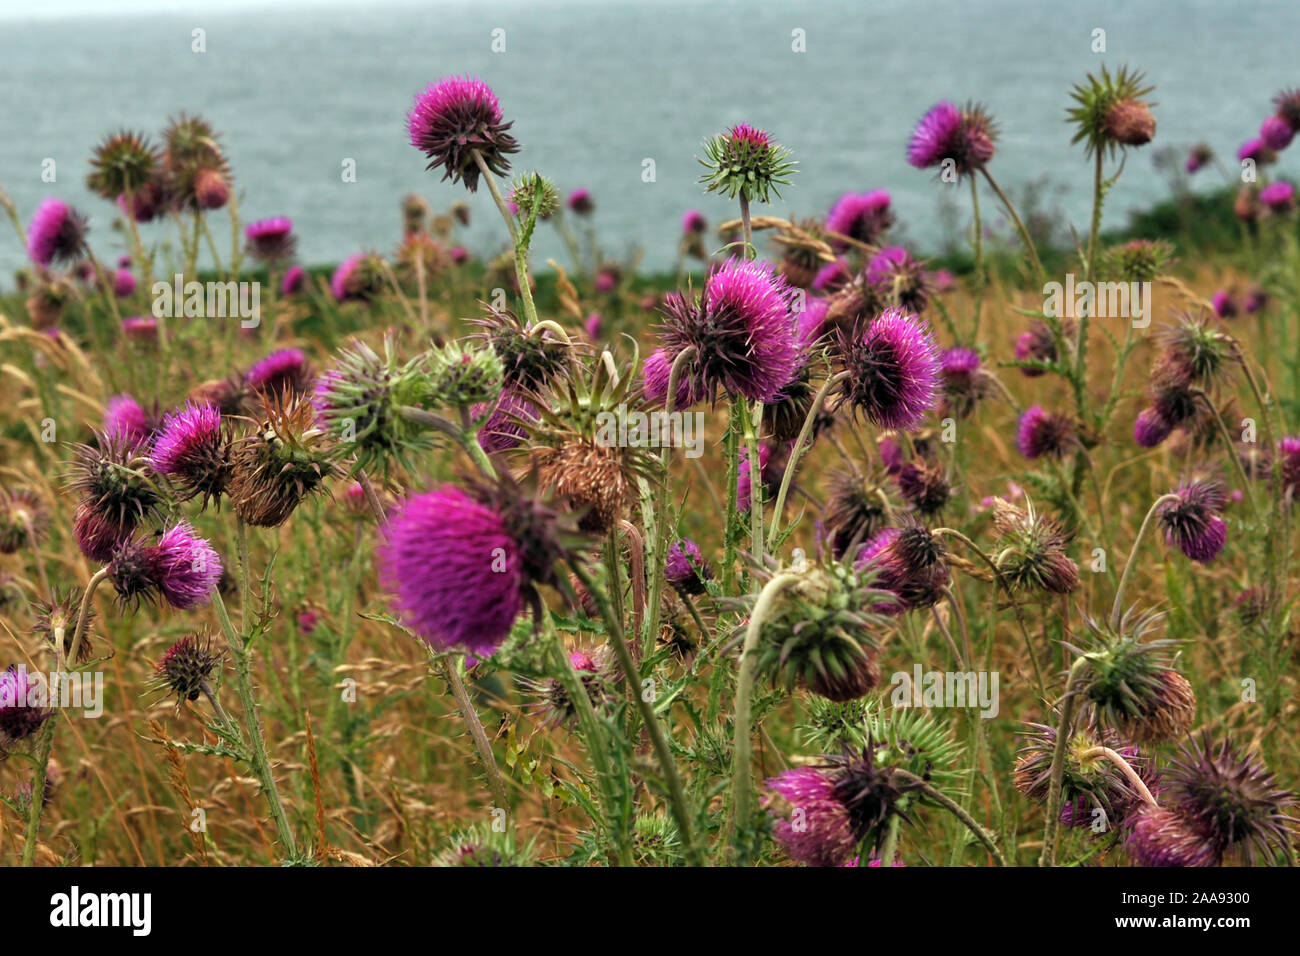 Nodding Thistle or Musk Thistle - Carduus Nutans, Purple flowers on a coastal field overlooking the sea Stock Photo